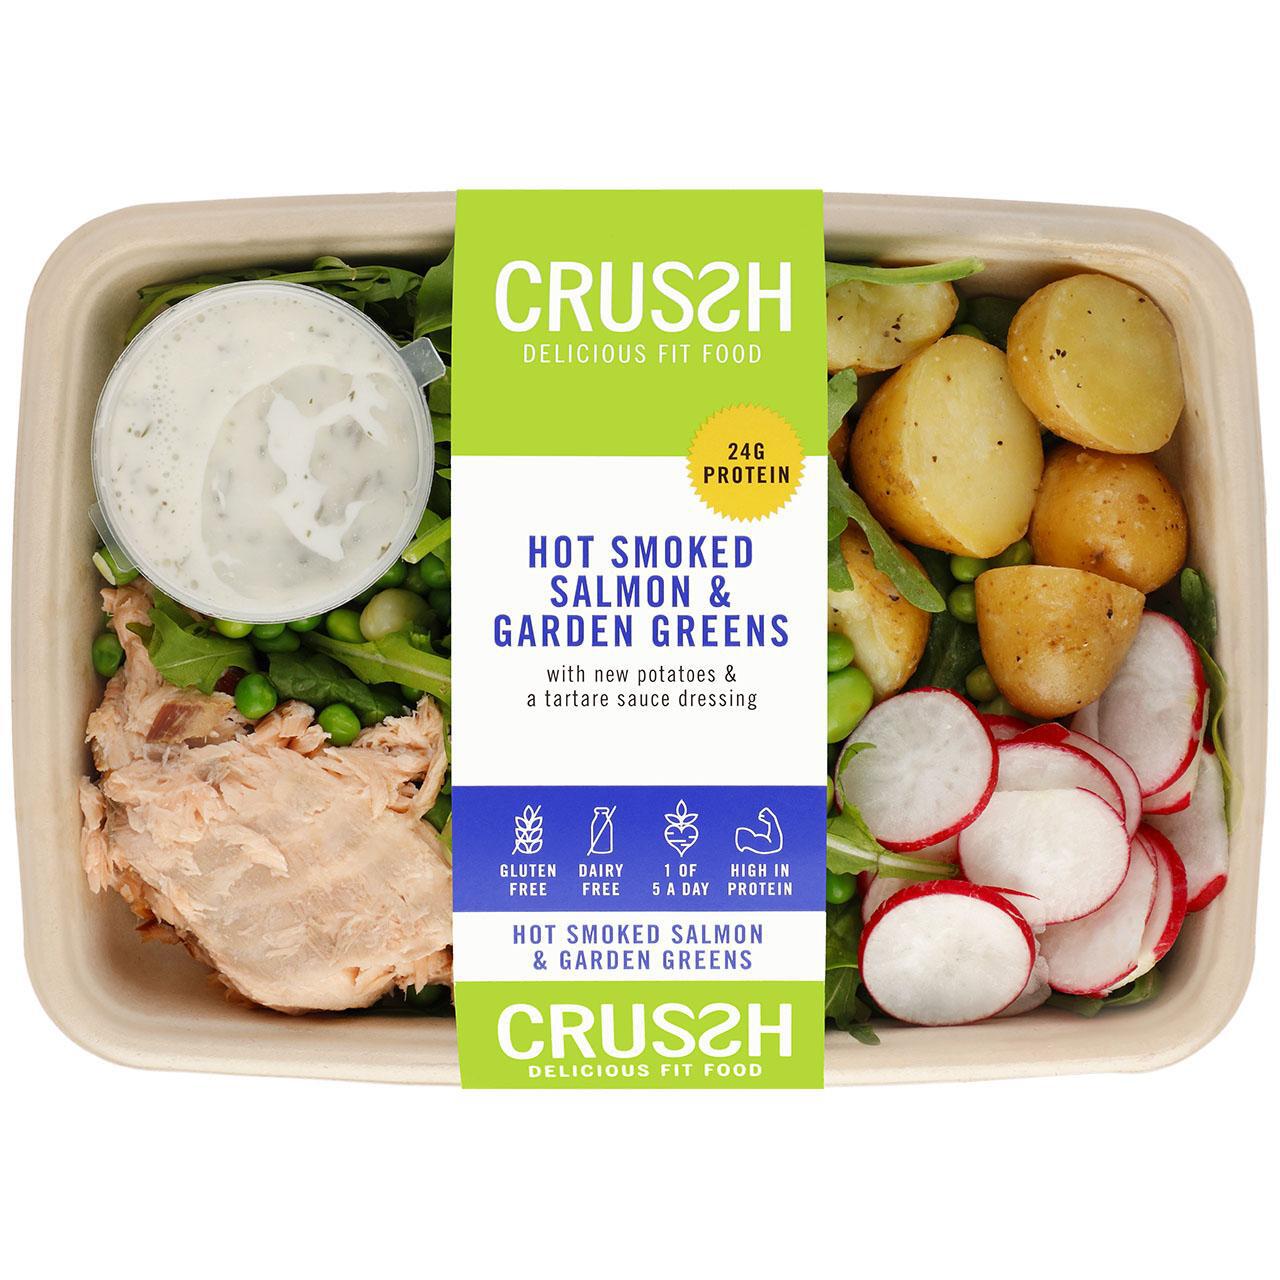 Crussh Hot Smoked Salmon & Garden Greens Salad Box